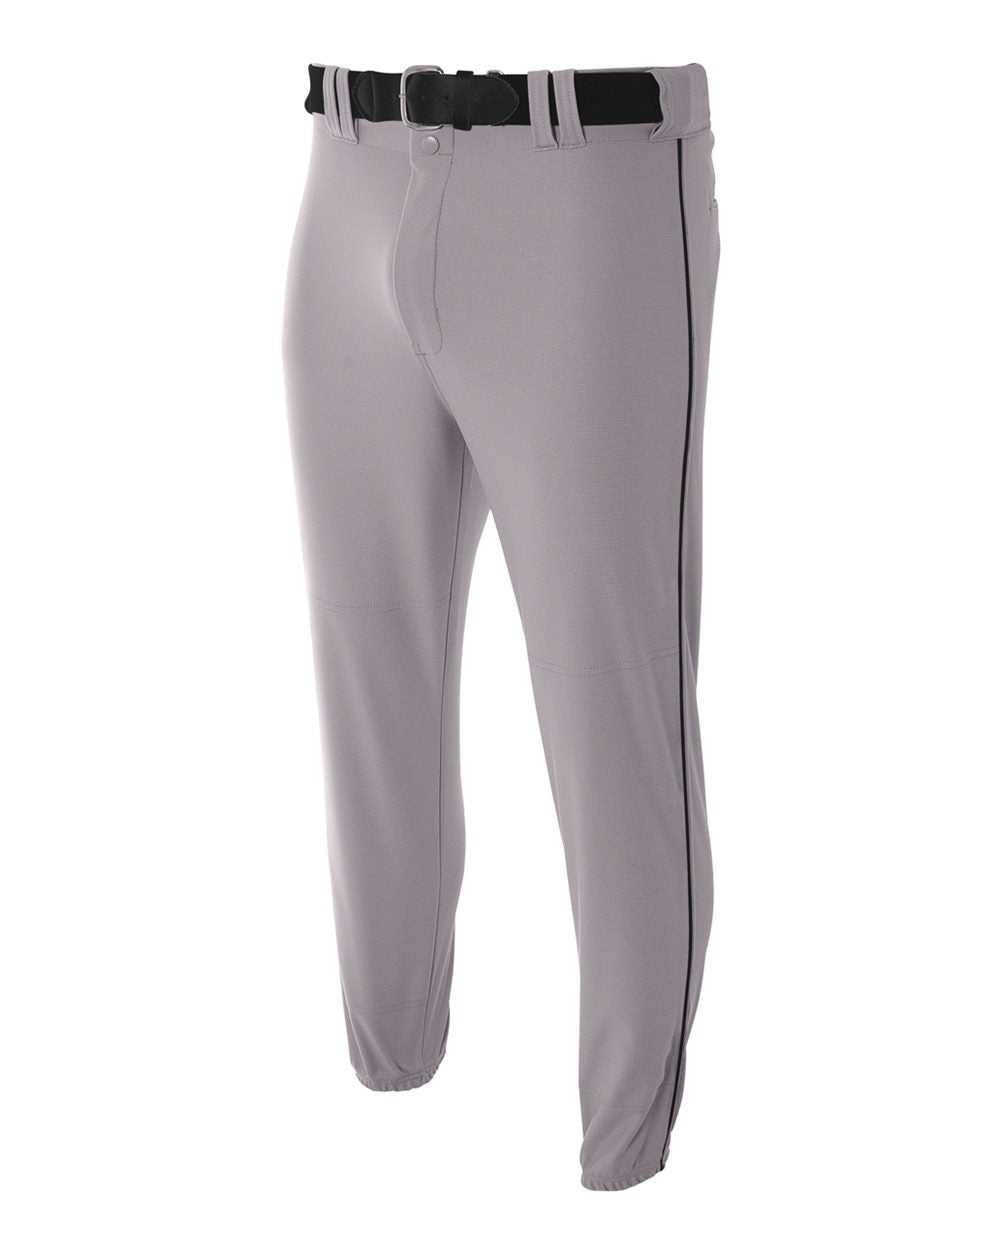 XTREME Relaxed Sweatpants w/ Elastic bottom – VBALLIFE Athletic Apparel